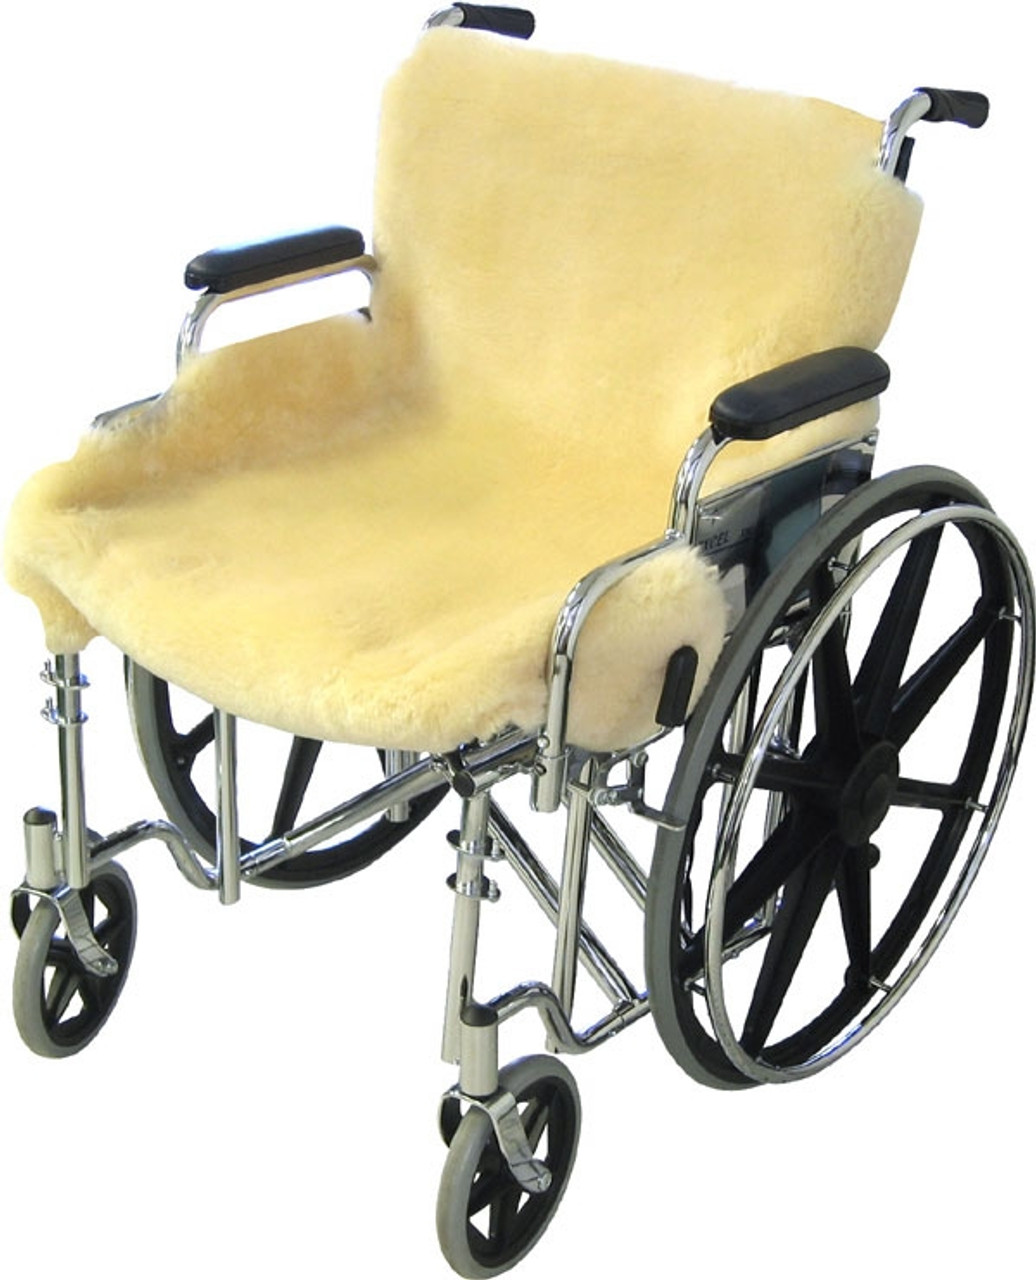 Sheepskin Wheelchair Seat Cover by Sheepskin Ranch